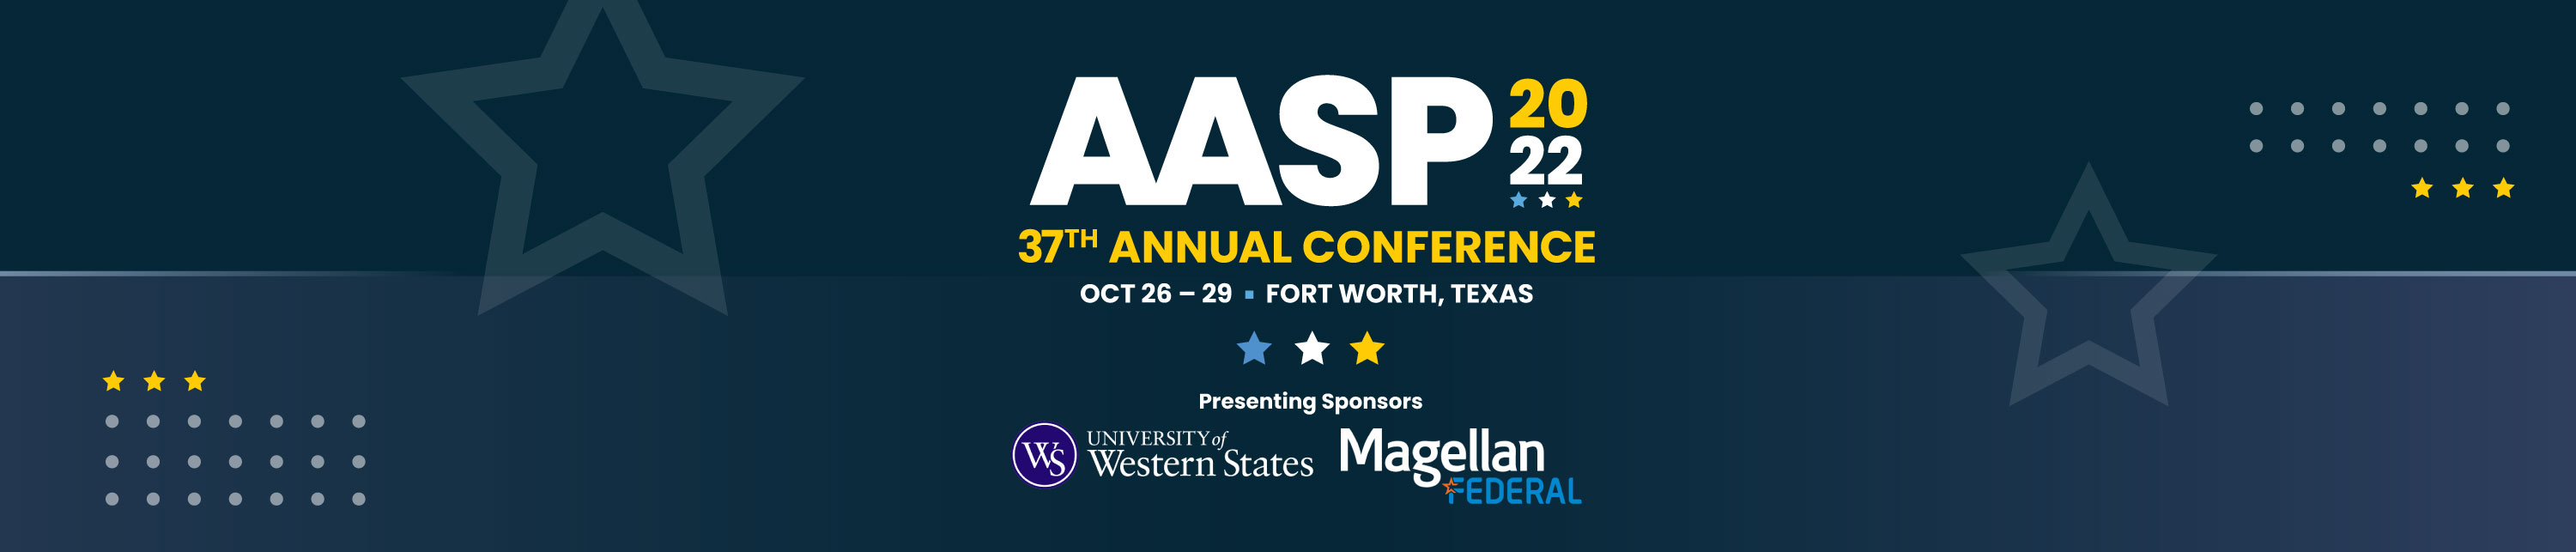 Aasp Conference 2023 2023 Calendar